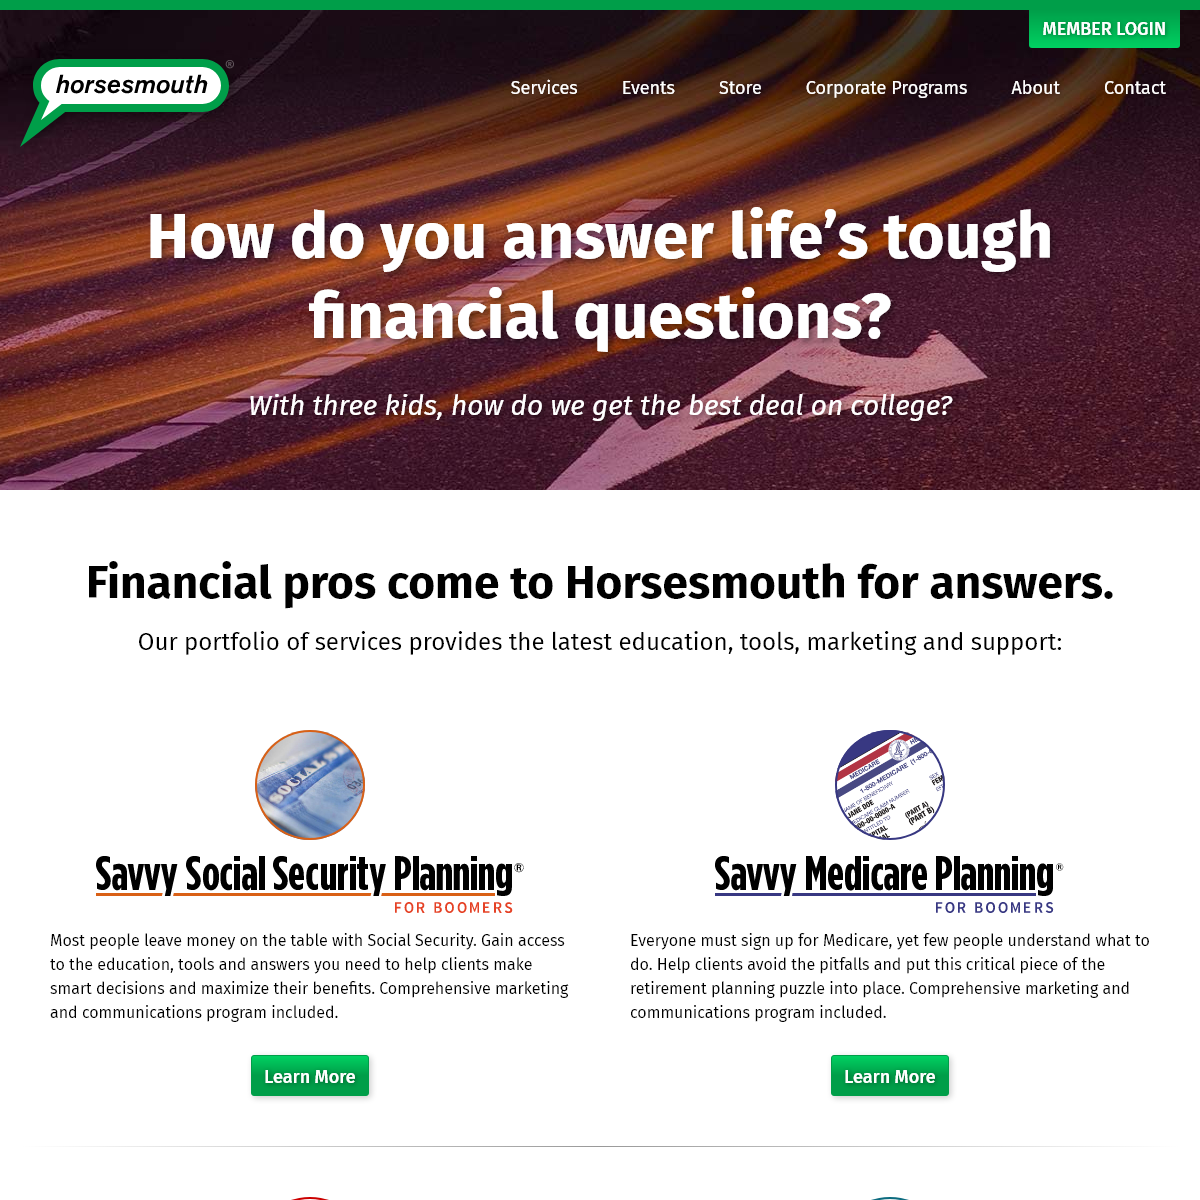 Horsesmouth - Helping advisors succeed - Public